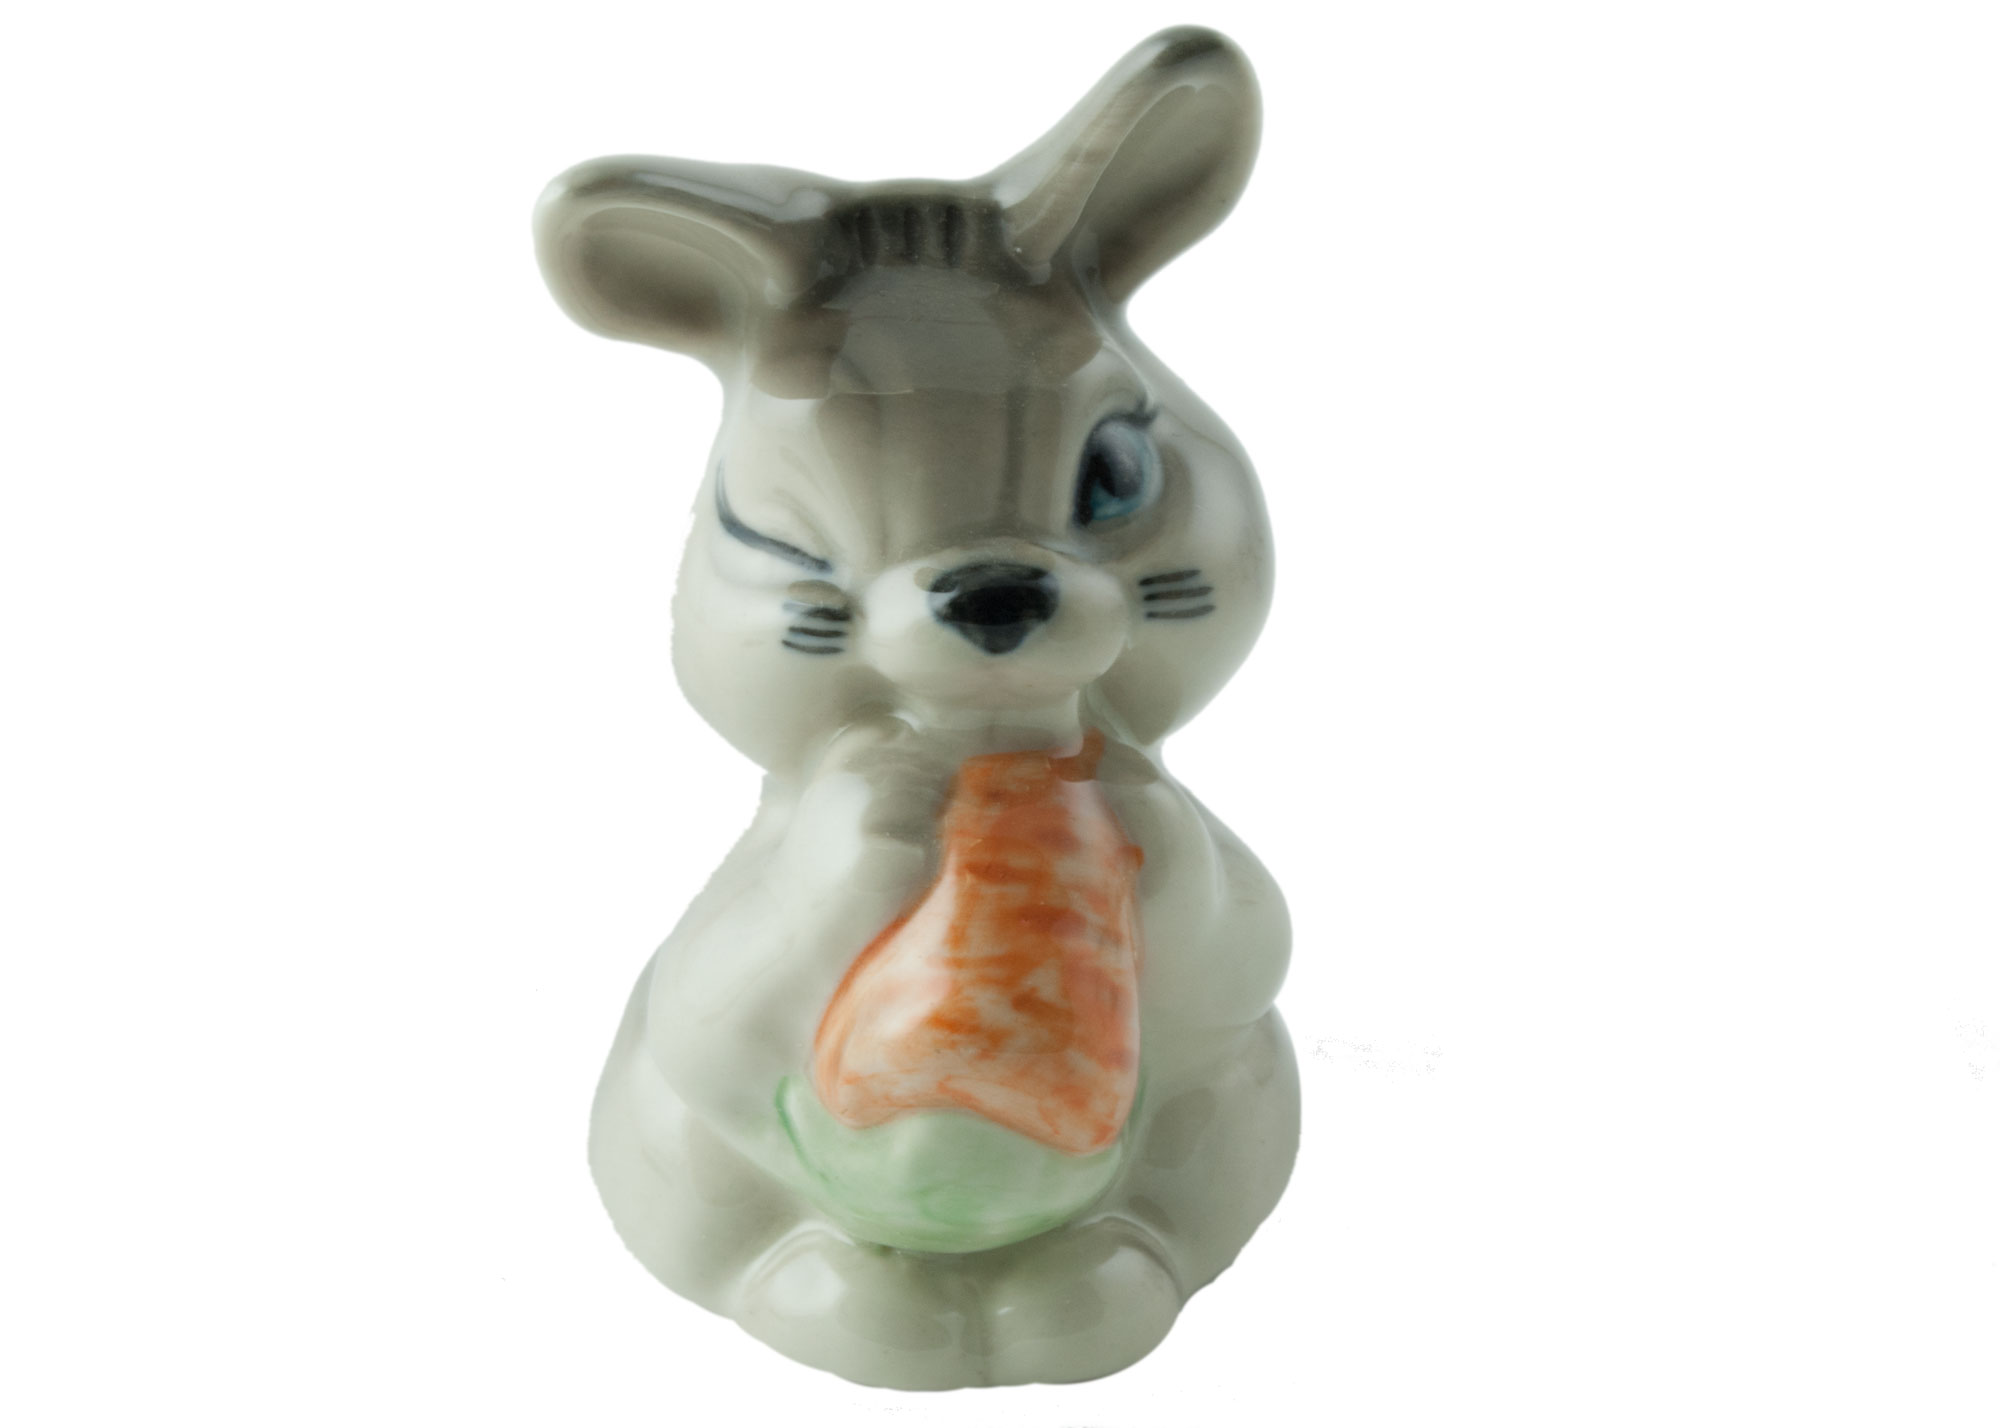 Buy Winking Rabbit  Figurine at GoldenCockerel.com